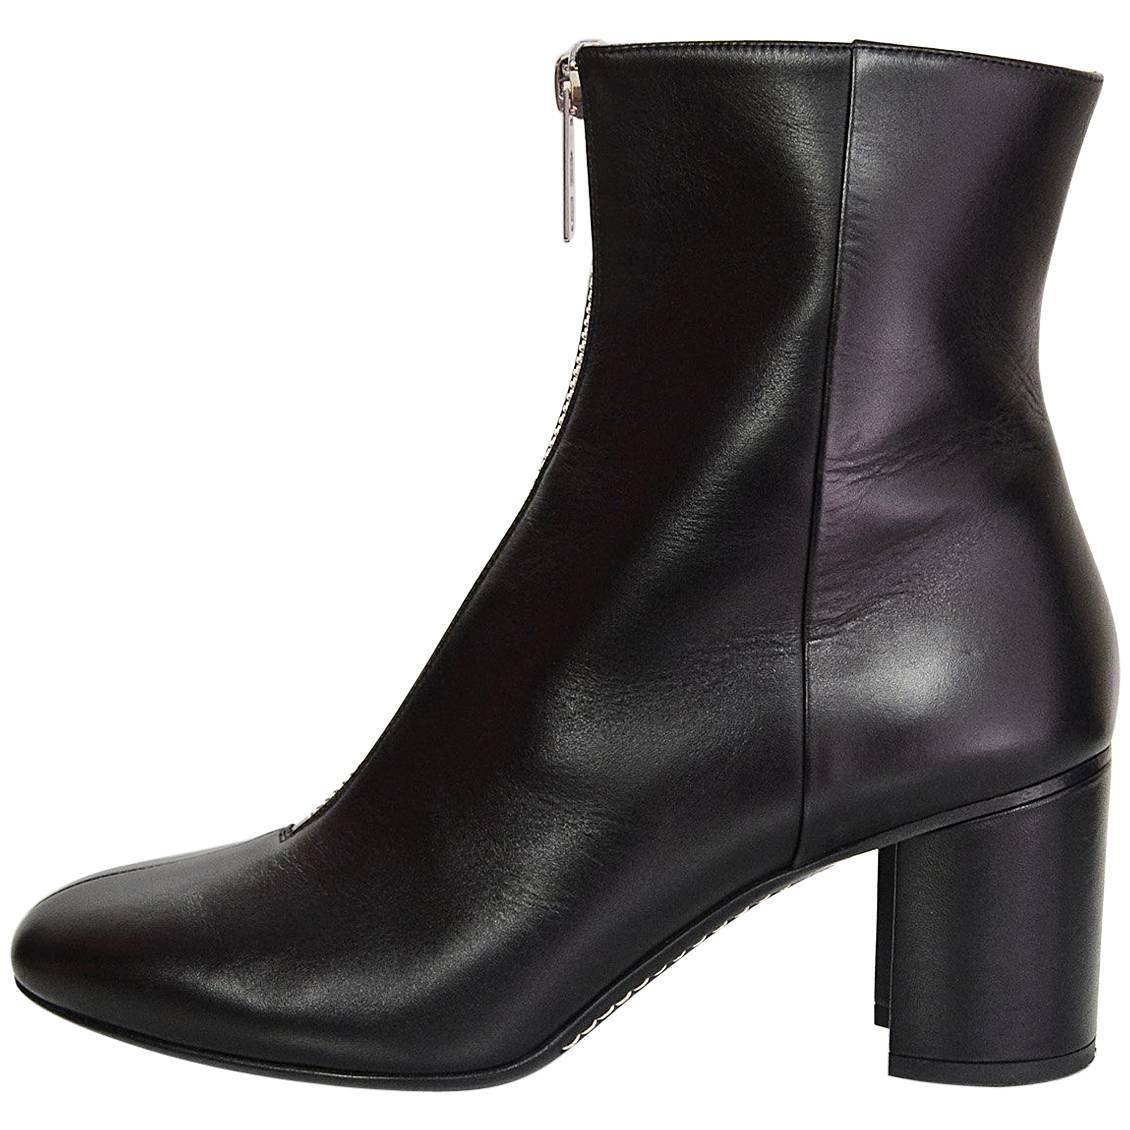 Hermes Black Leather New York 70 Zipper Ankle Boots Sz 38.5 rt. $1, 375